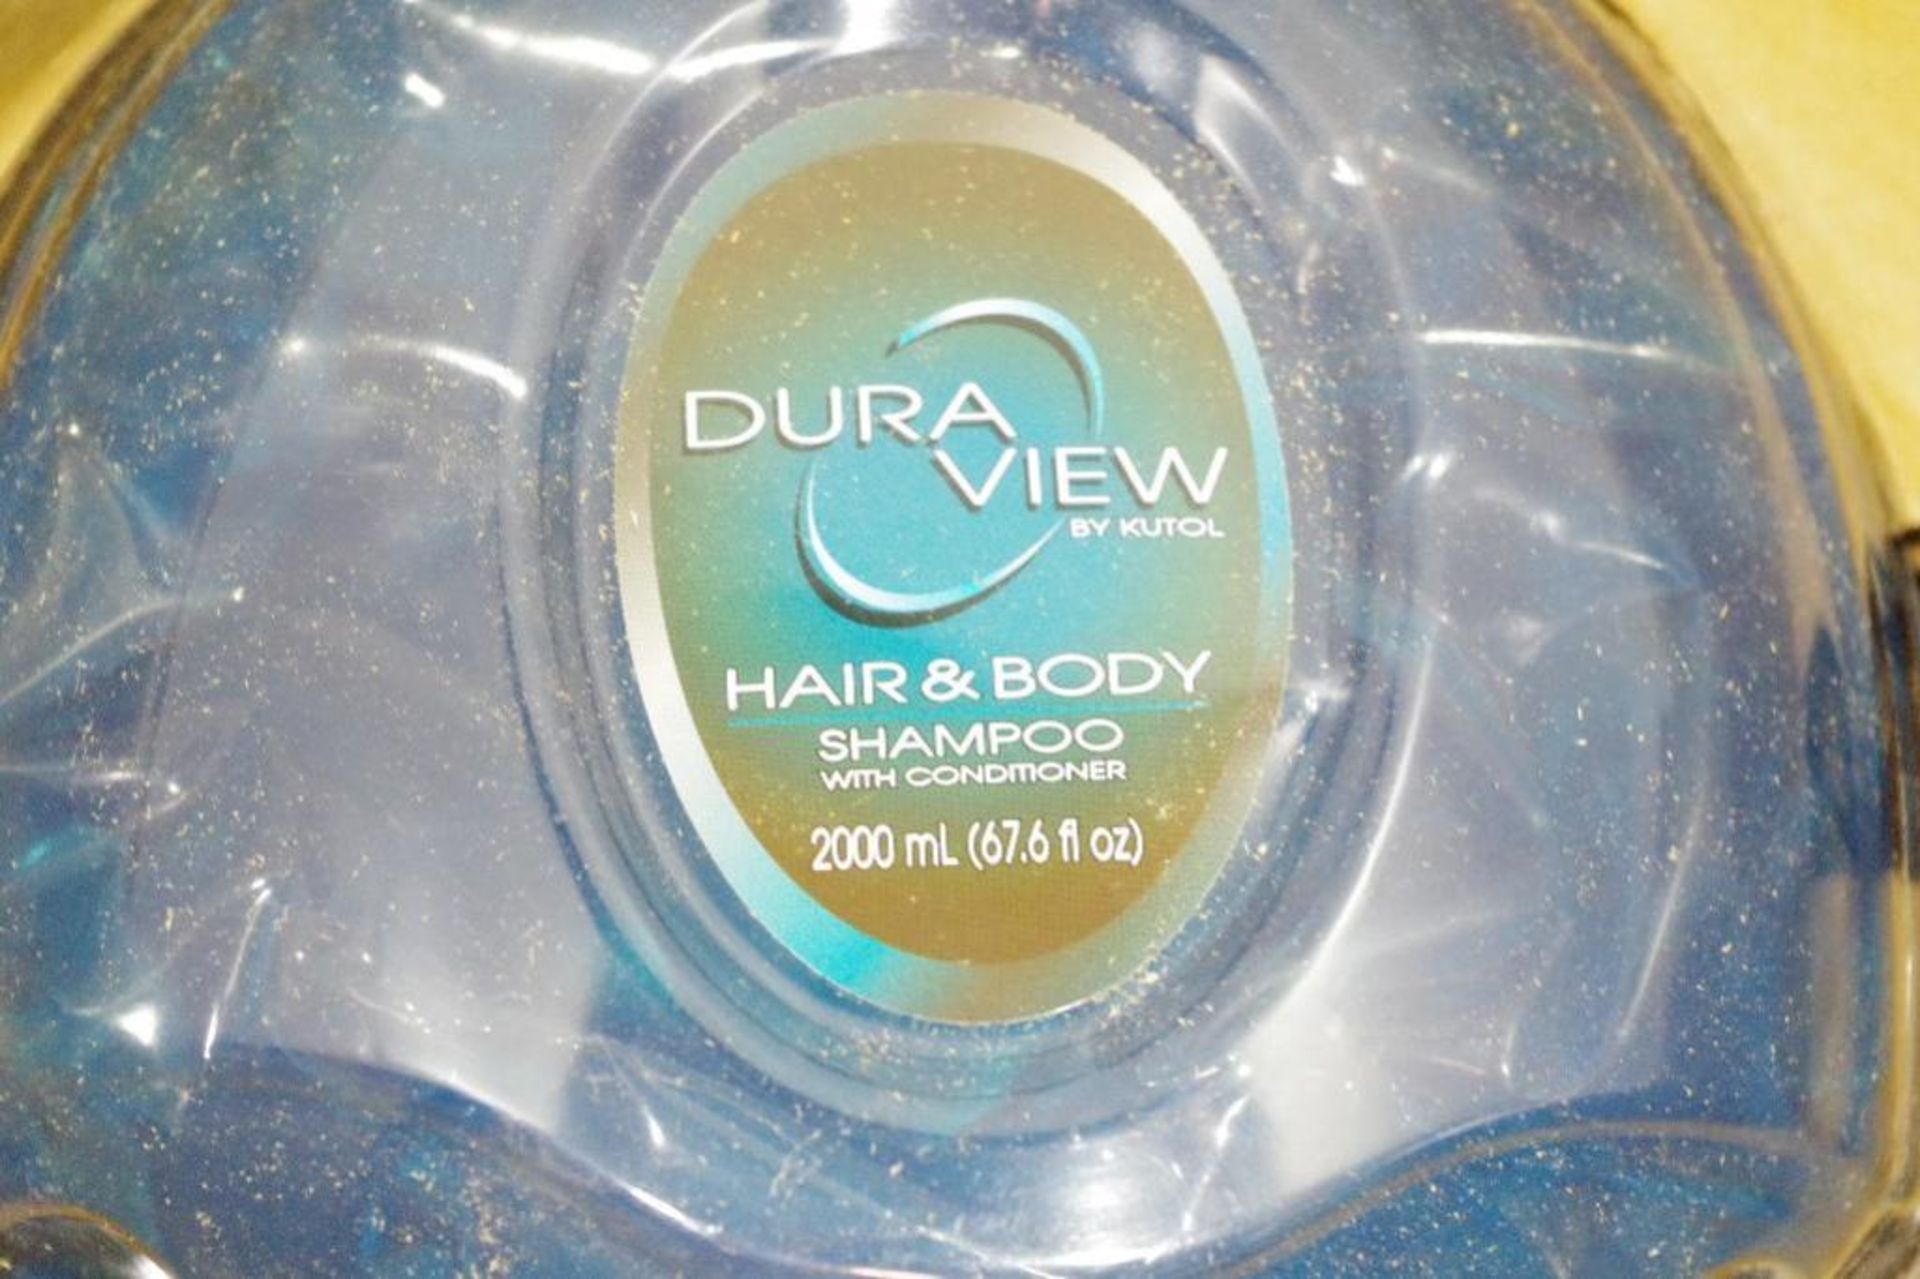 Case of DURAVIEW Hair & Body Shampoo 2000 ml. Bottles (1 Case of 3 Bottles) - Image 3 of 3